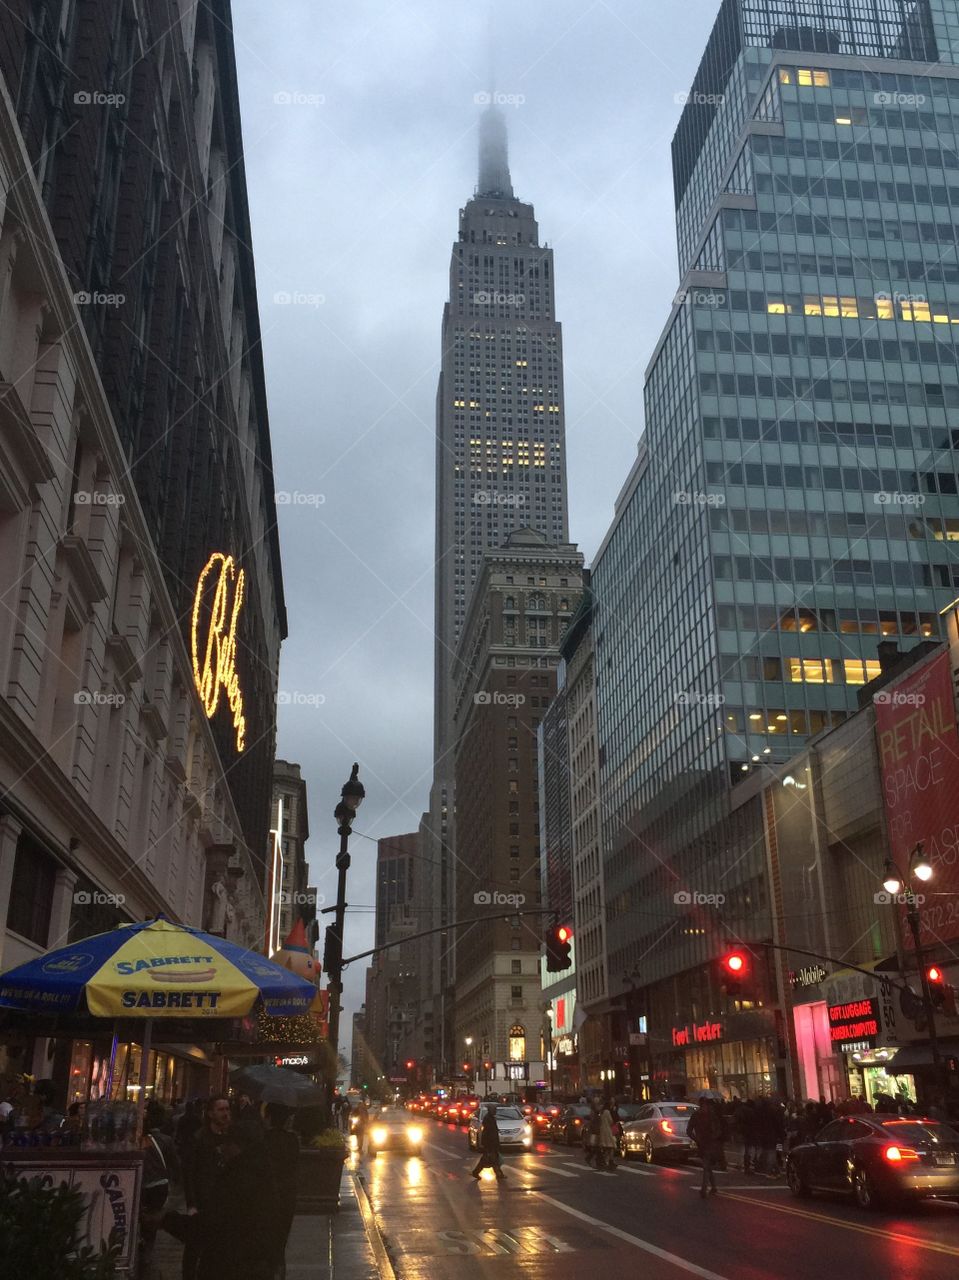 New York City in the rain